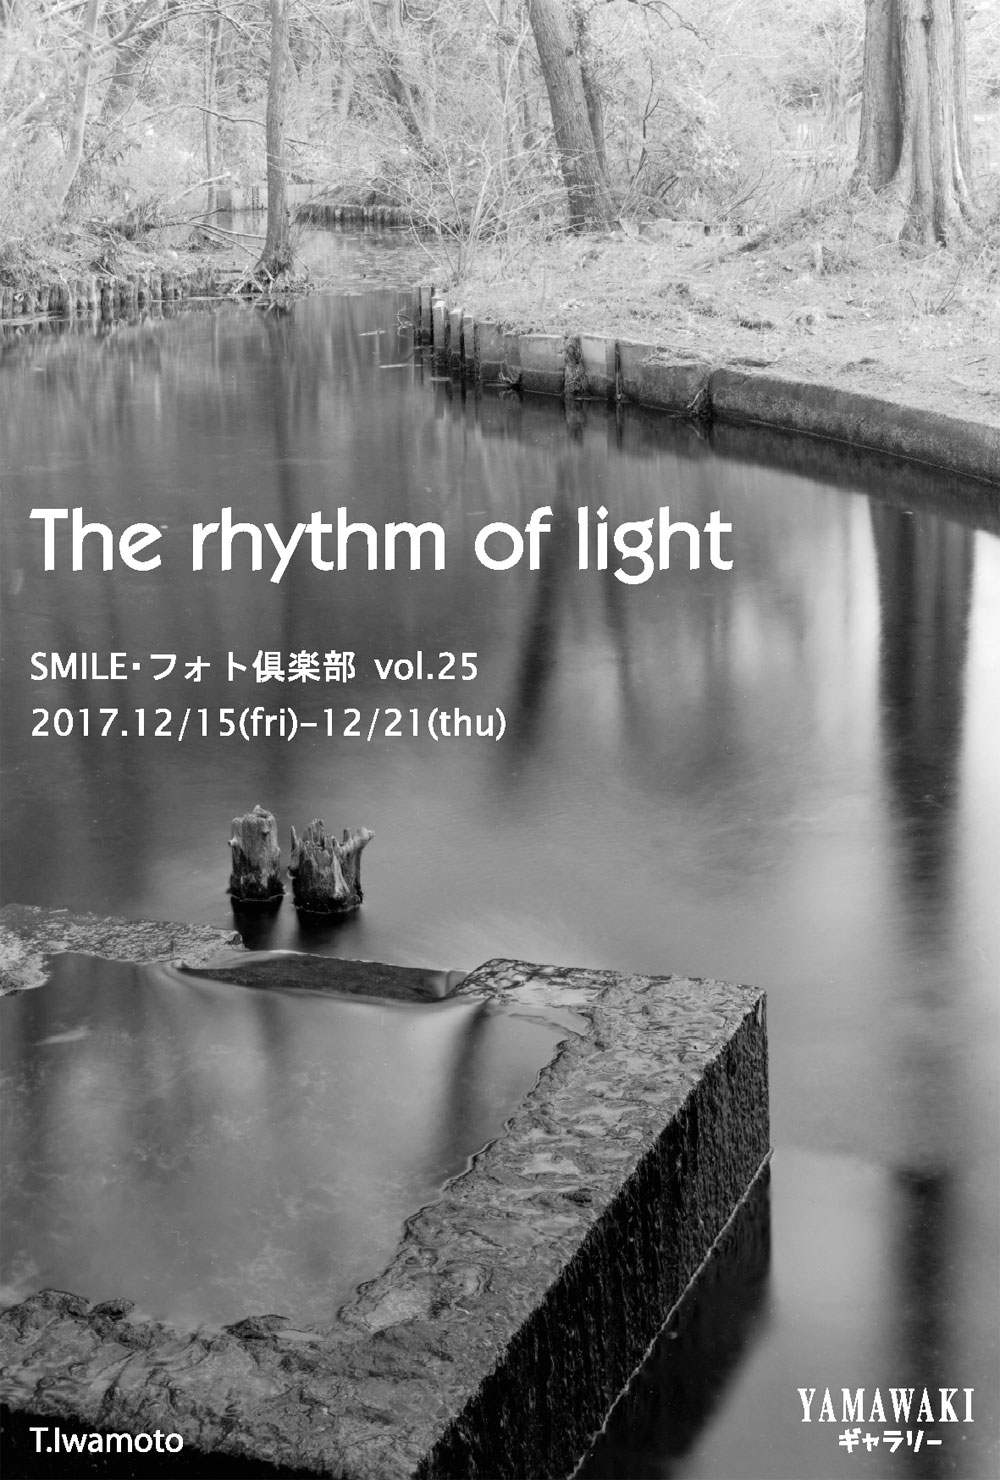 SMILE・フォト倶楽部 vol.25 / The rhythm of light